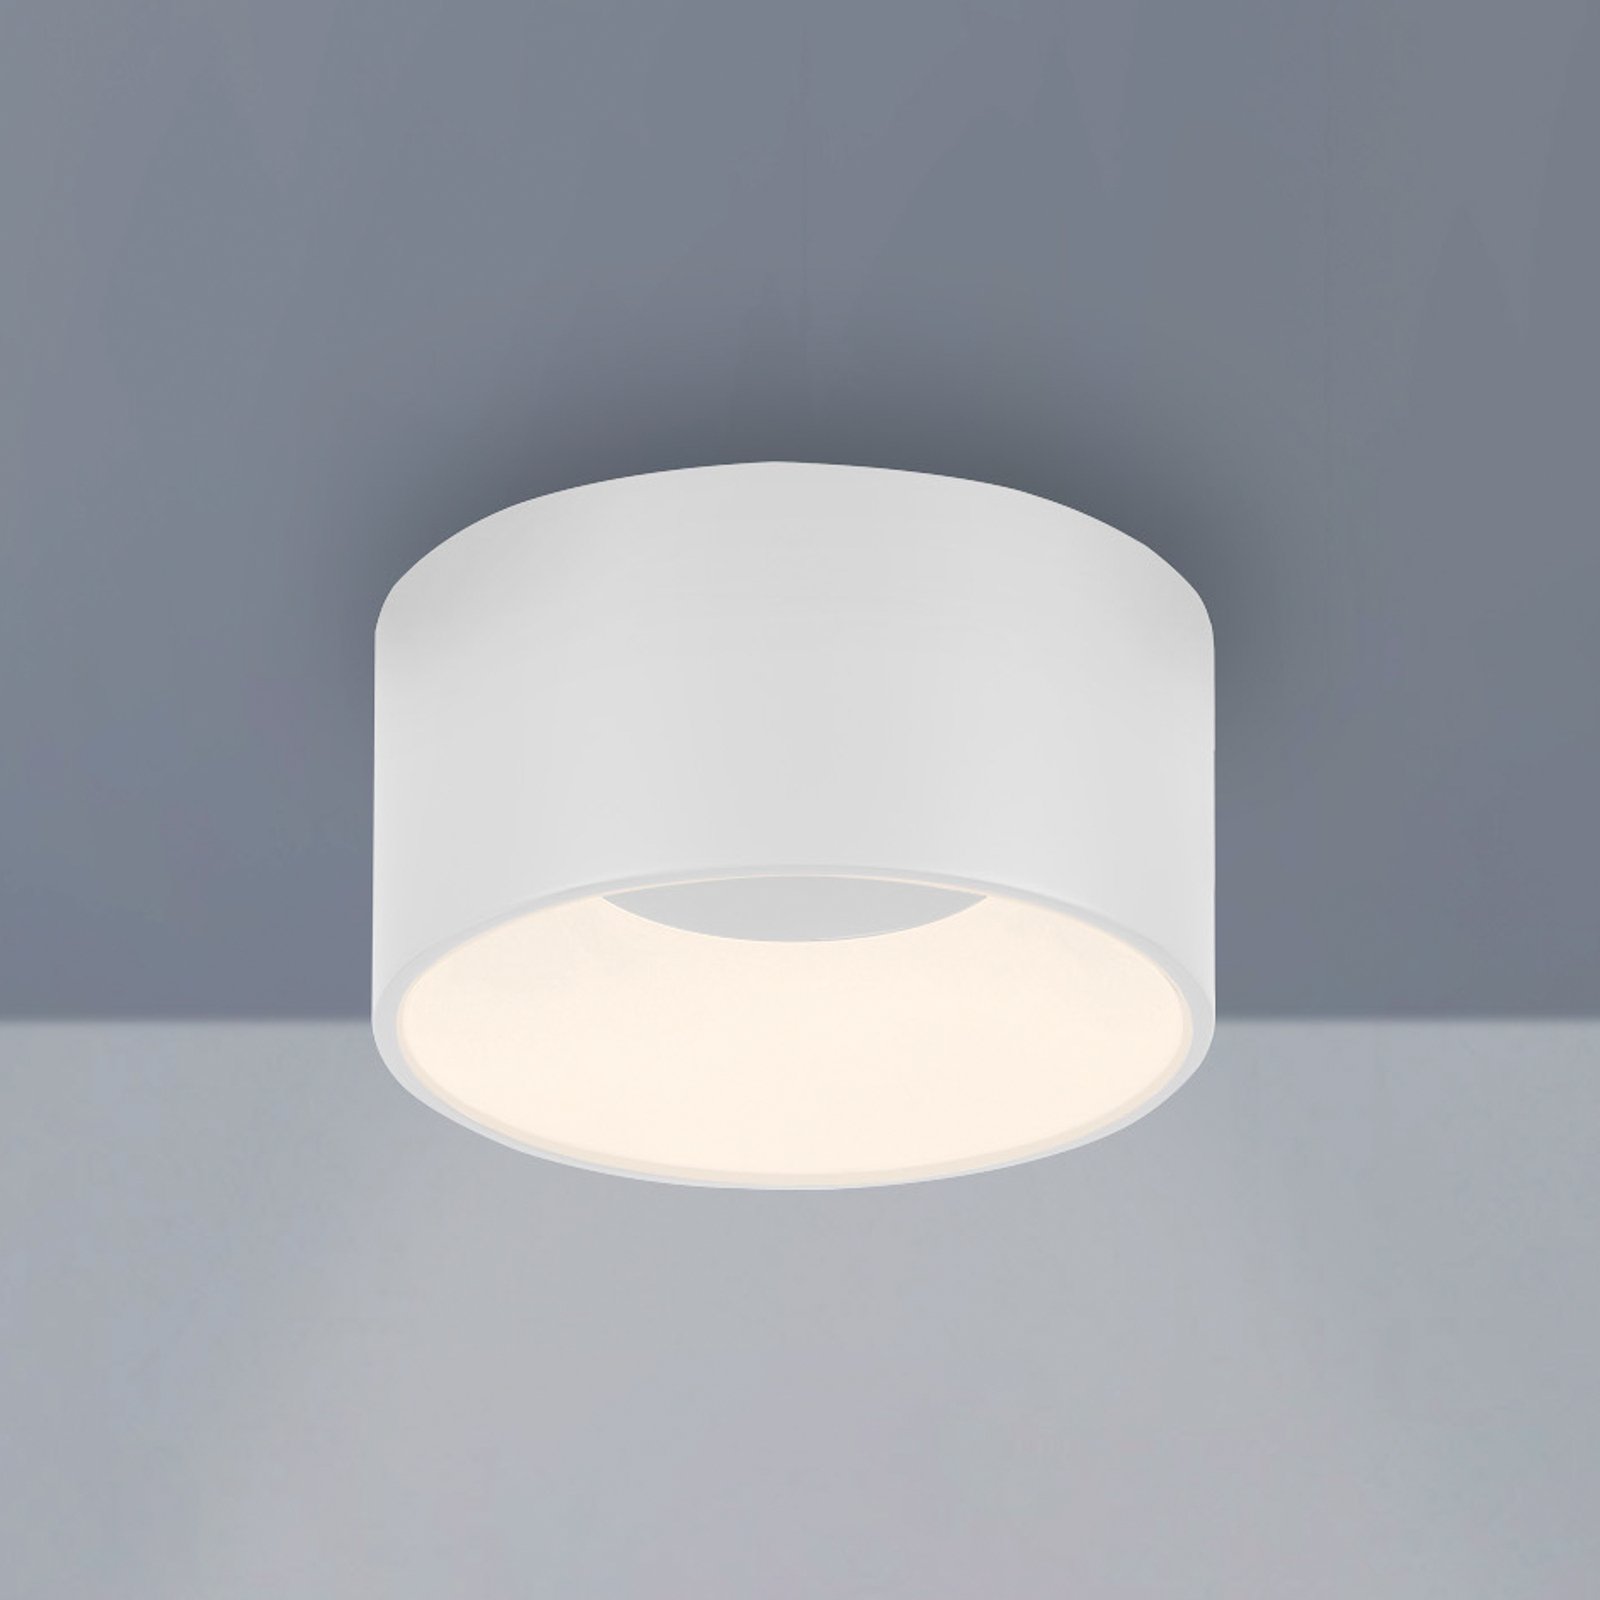 JUST LIGHT. Plafonnier LED Tanika, blanc, Ø 16 cm, intensité variable